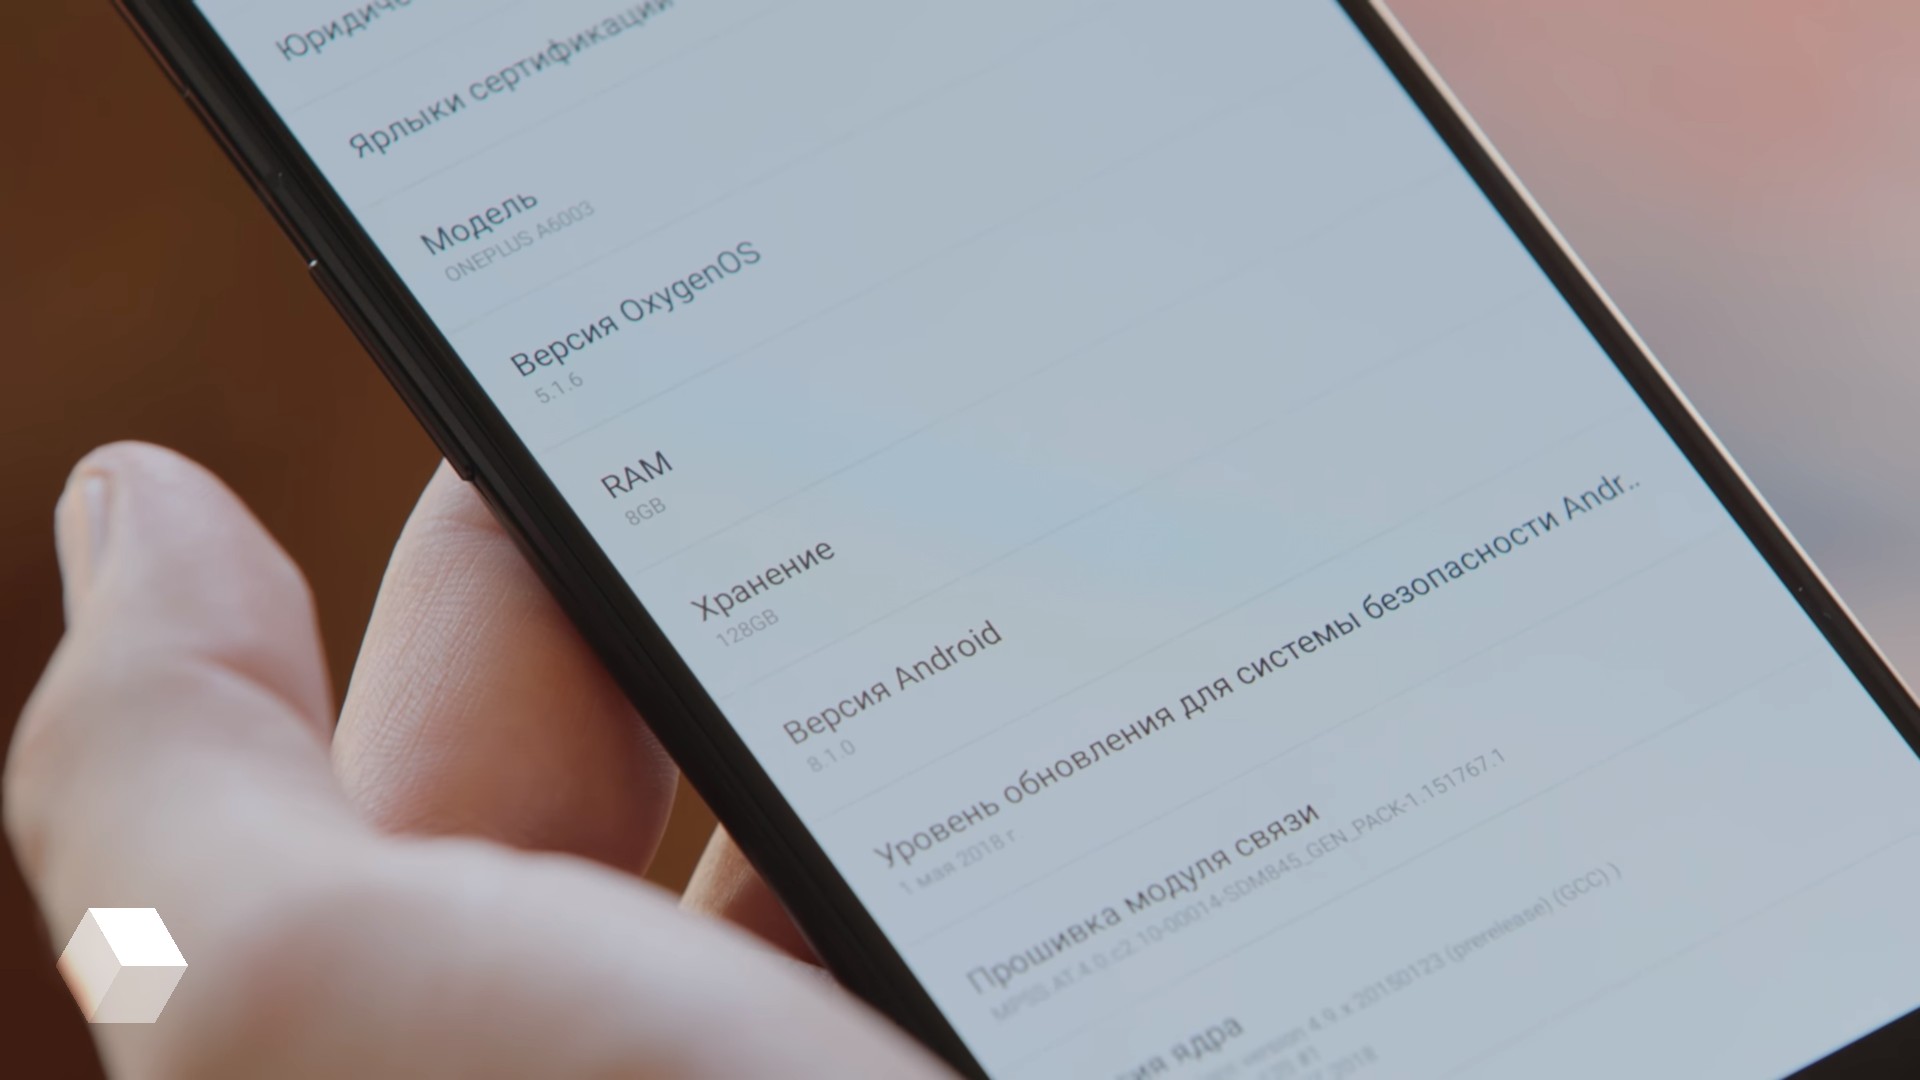 Вышла первая бета-сборка OxygenOS на основе Android P для OnePlus 6